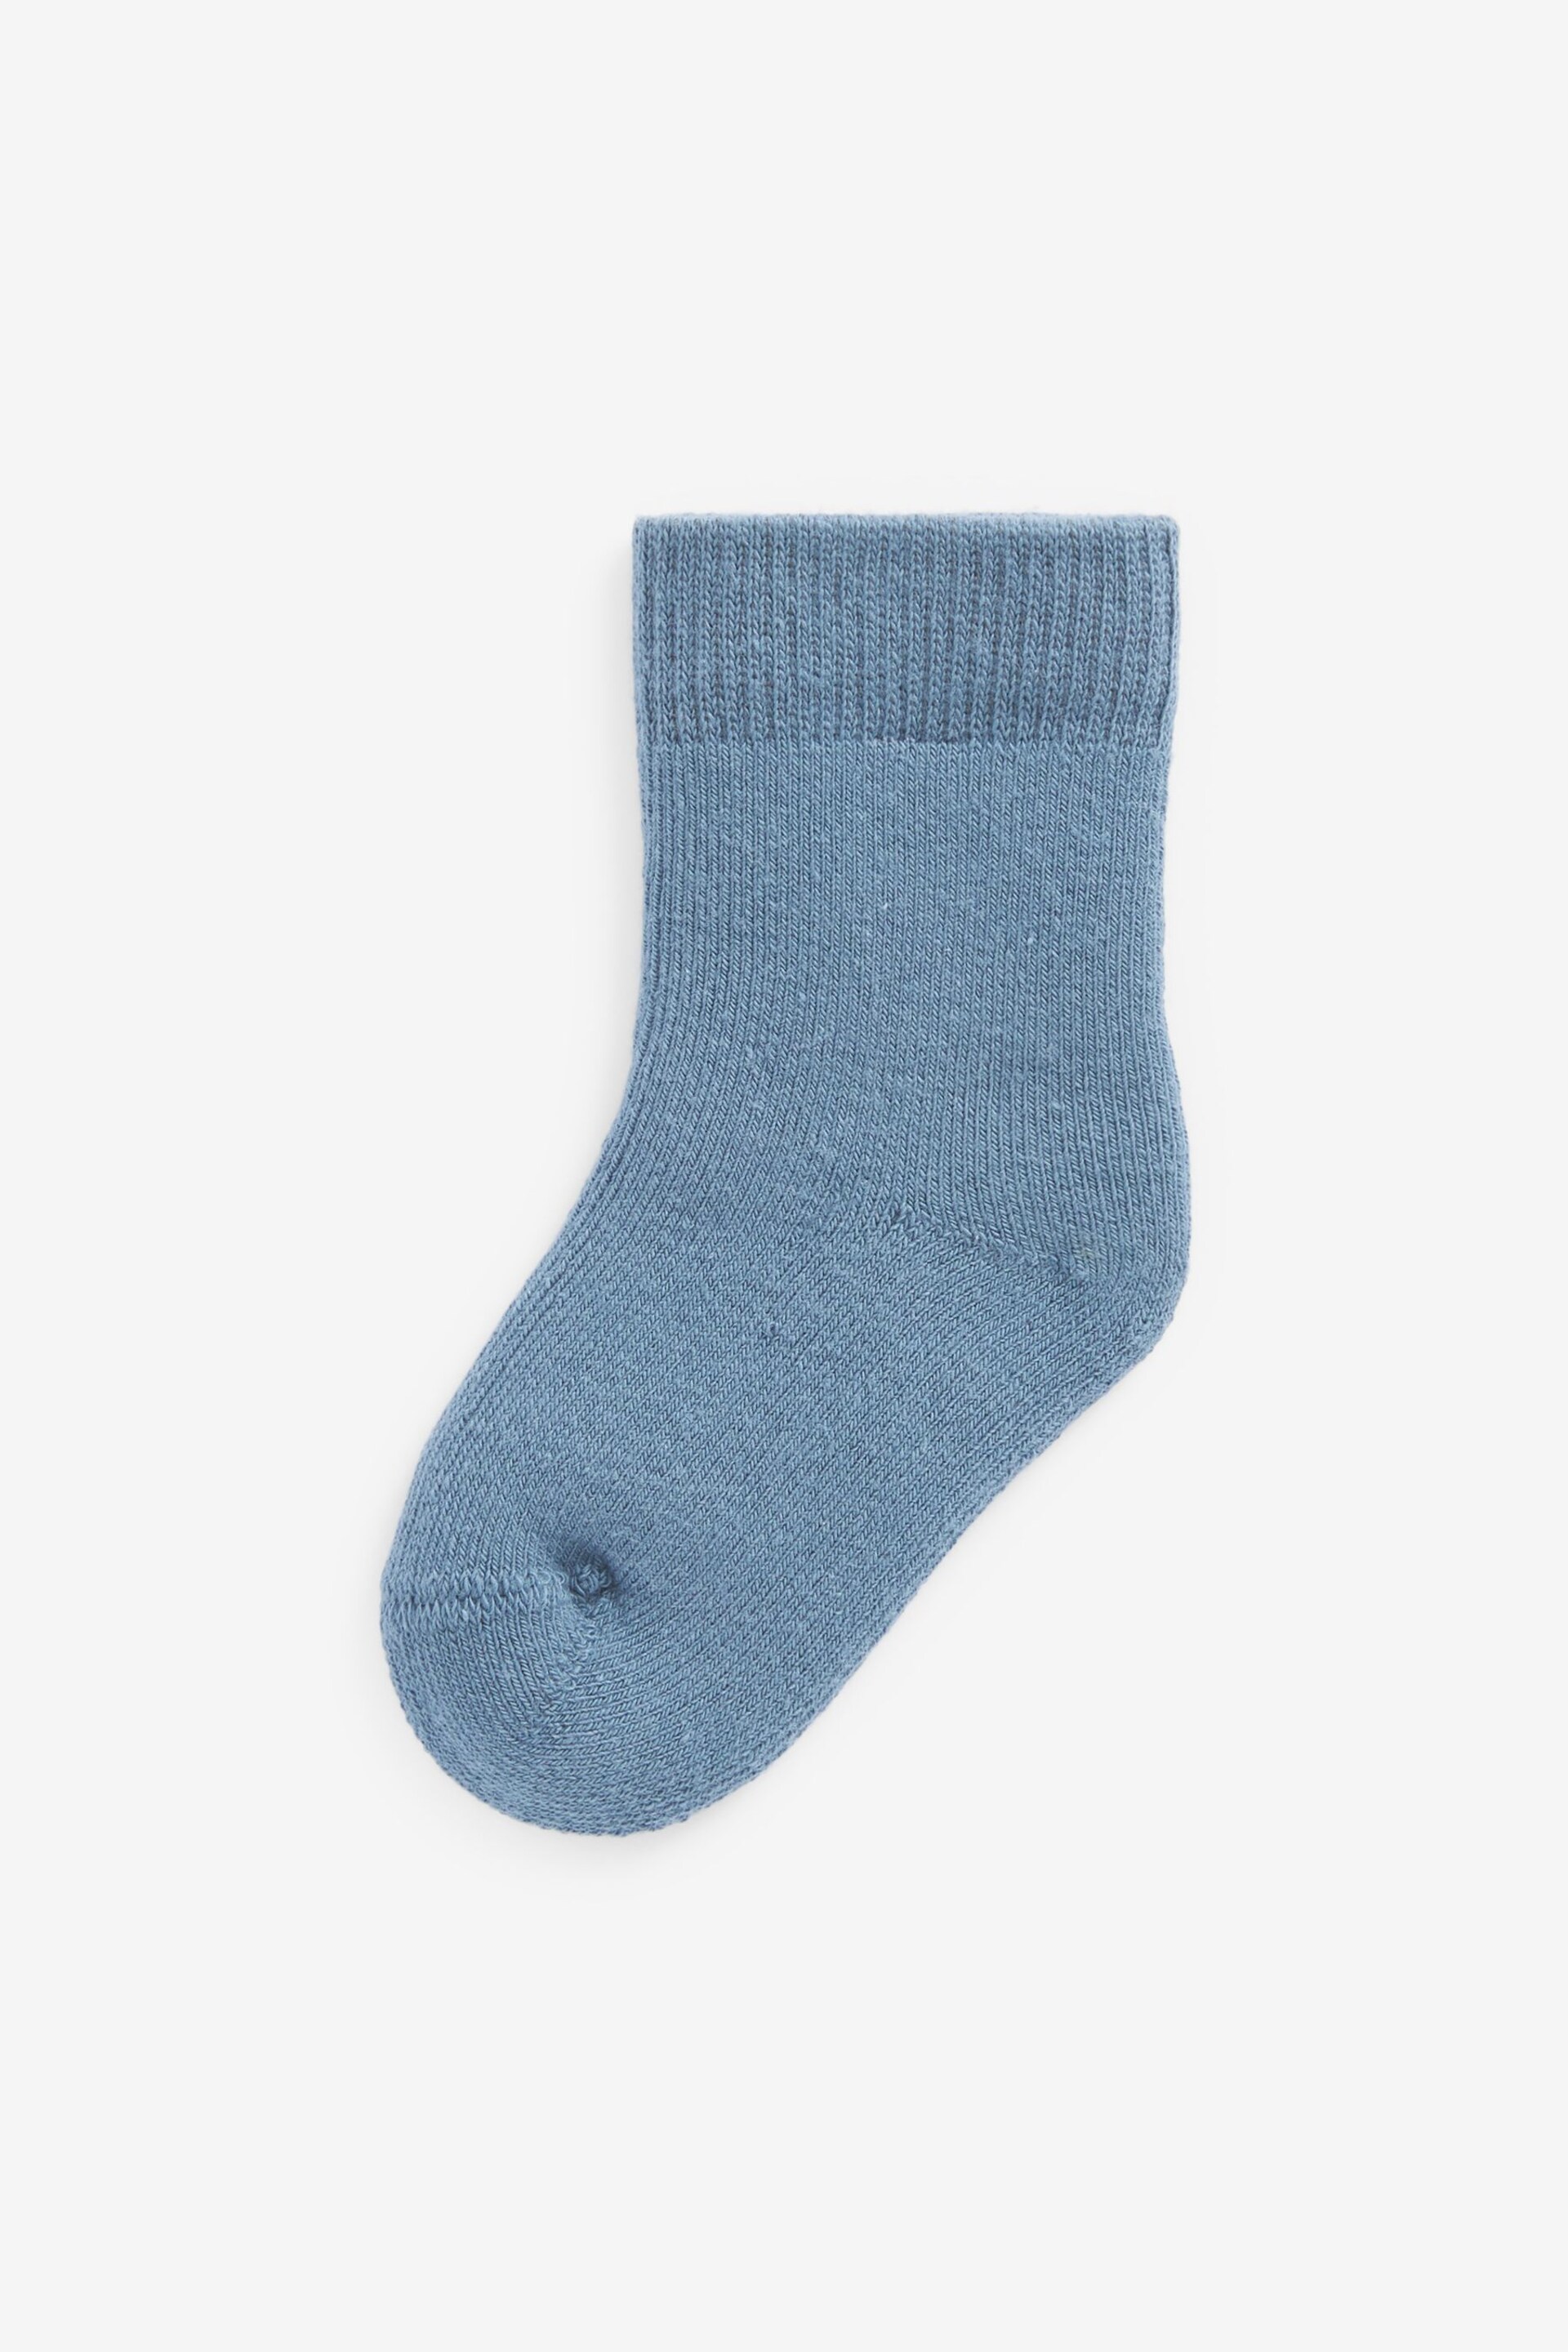 Teal Blue Baby Toweling Socks 4 Packs (0mths-2yrs) - Image 2 of 5